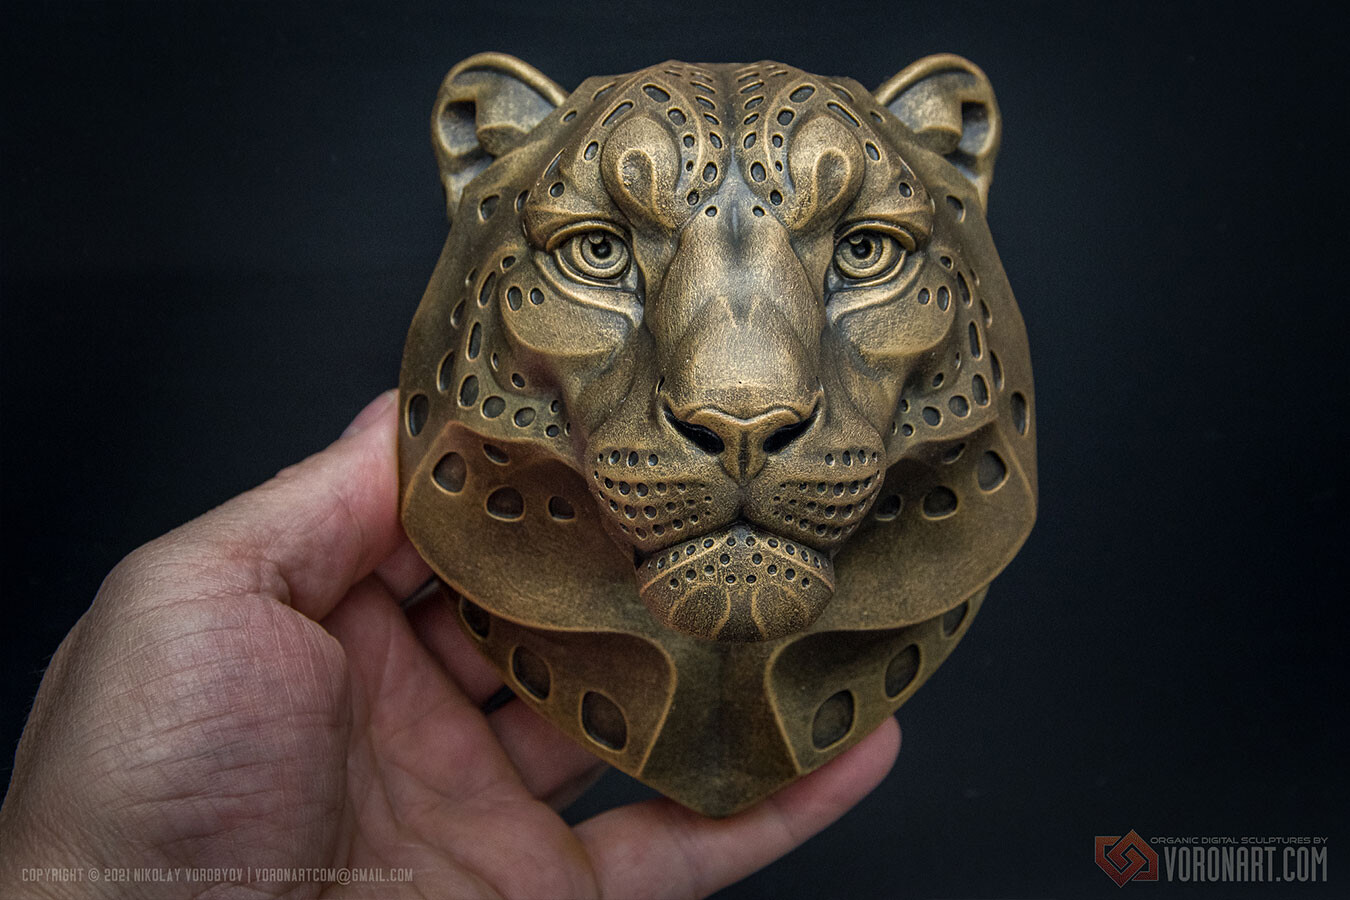 ArtStation - Stylized Snow Leopard bronze animal sculpture. Hand painted